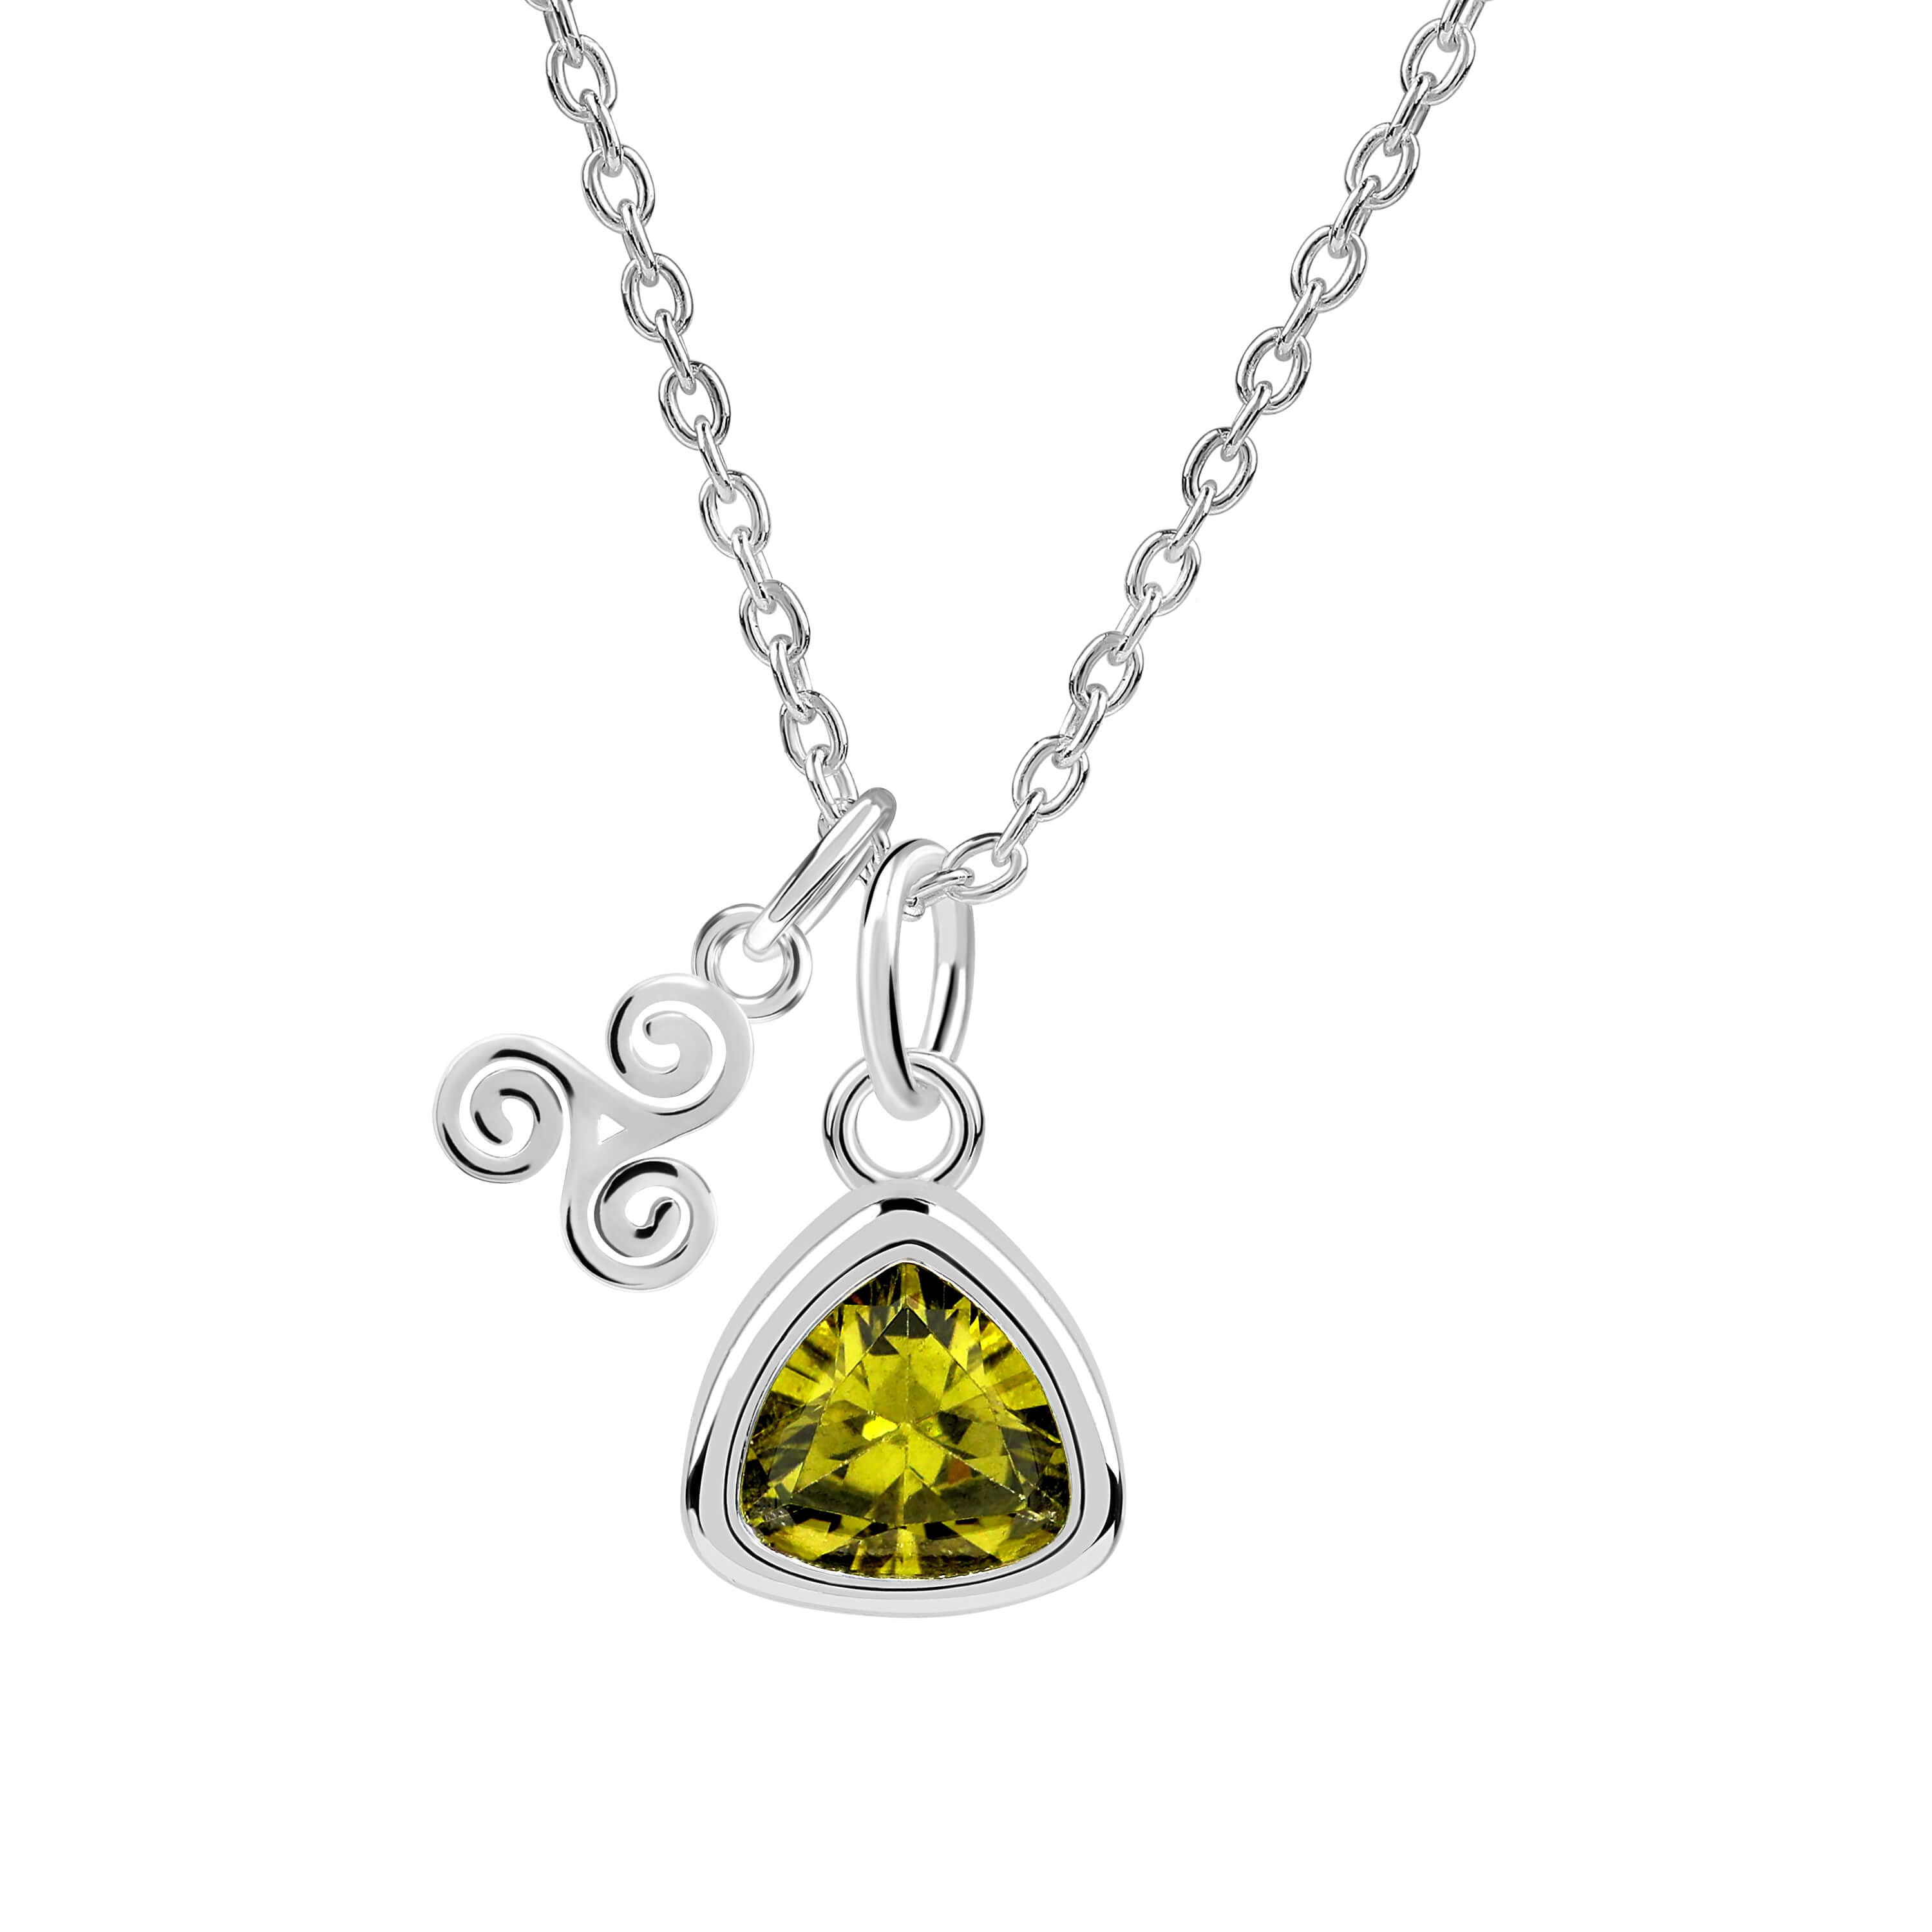 Triskelion Charm with Birthstone Necklace